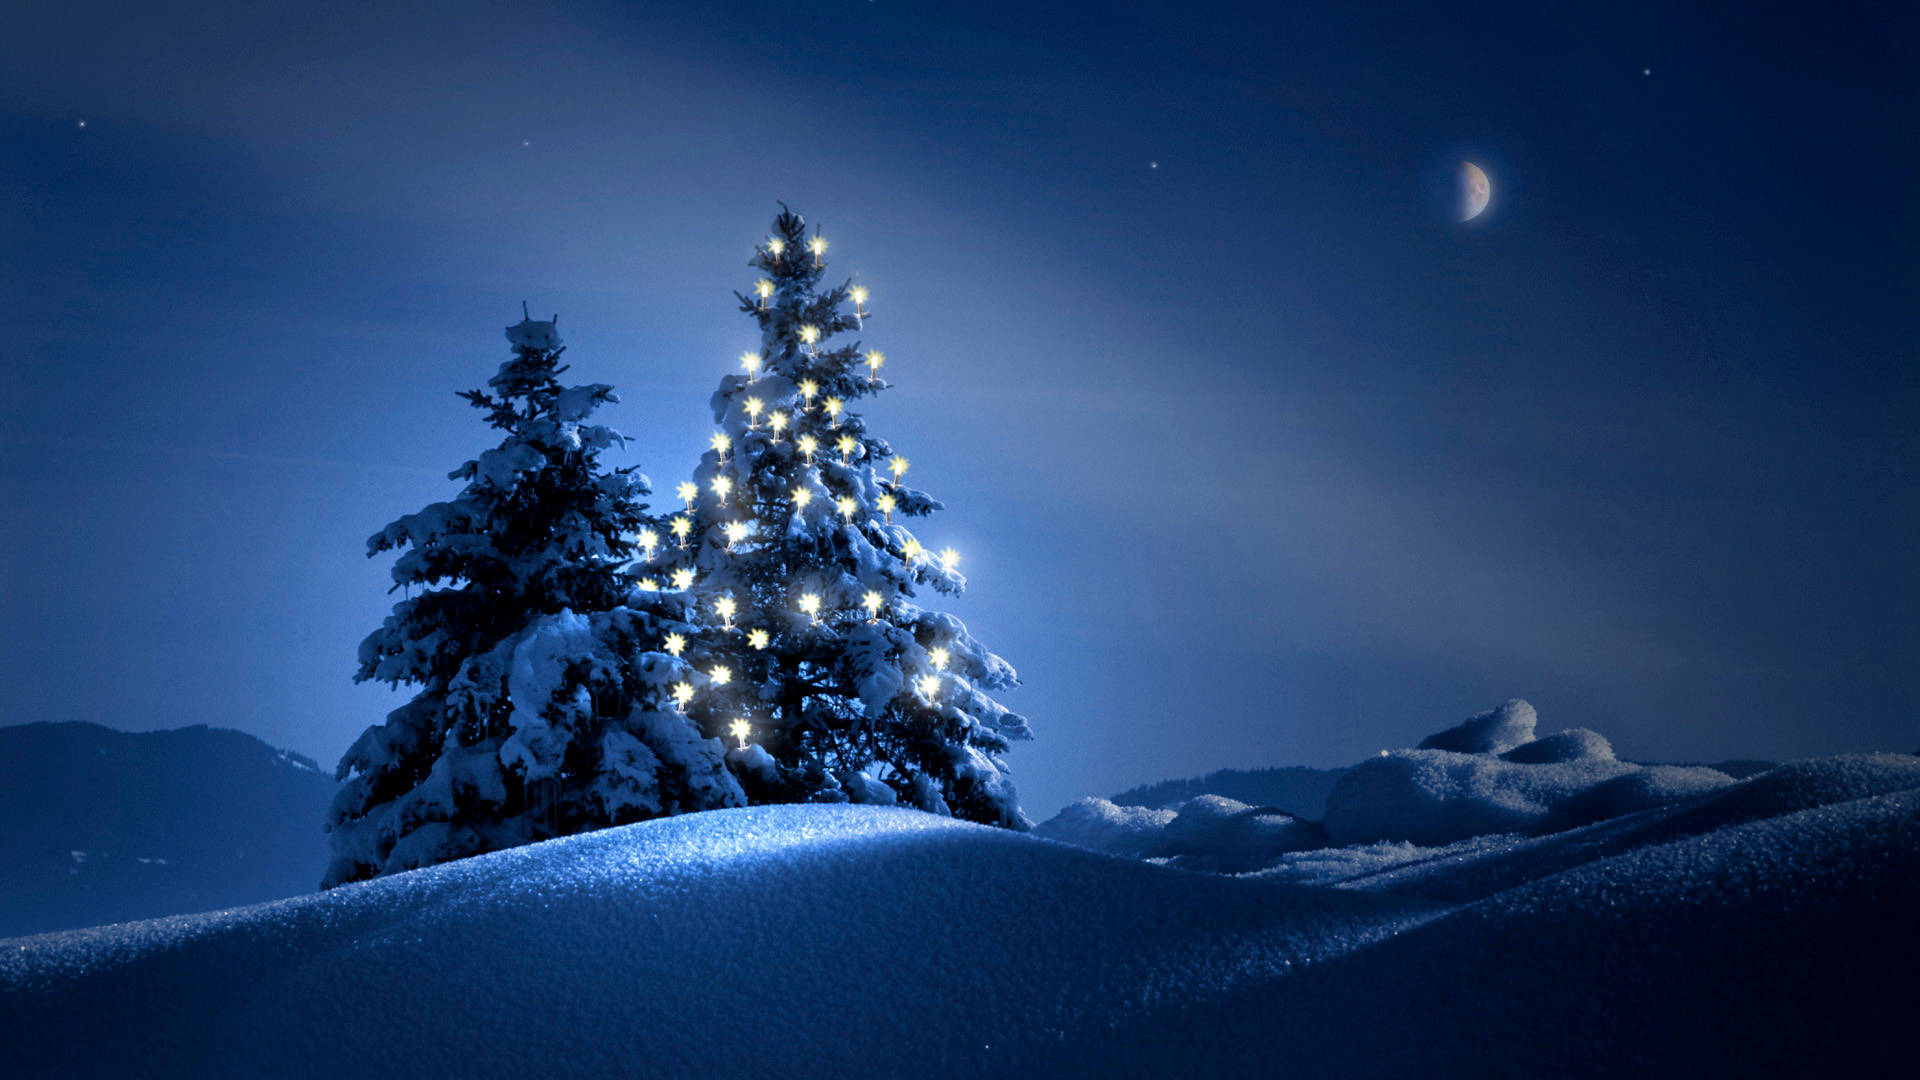 Hd Scenery Night Christmas Tree Background